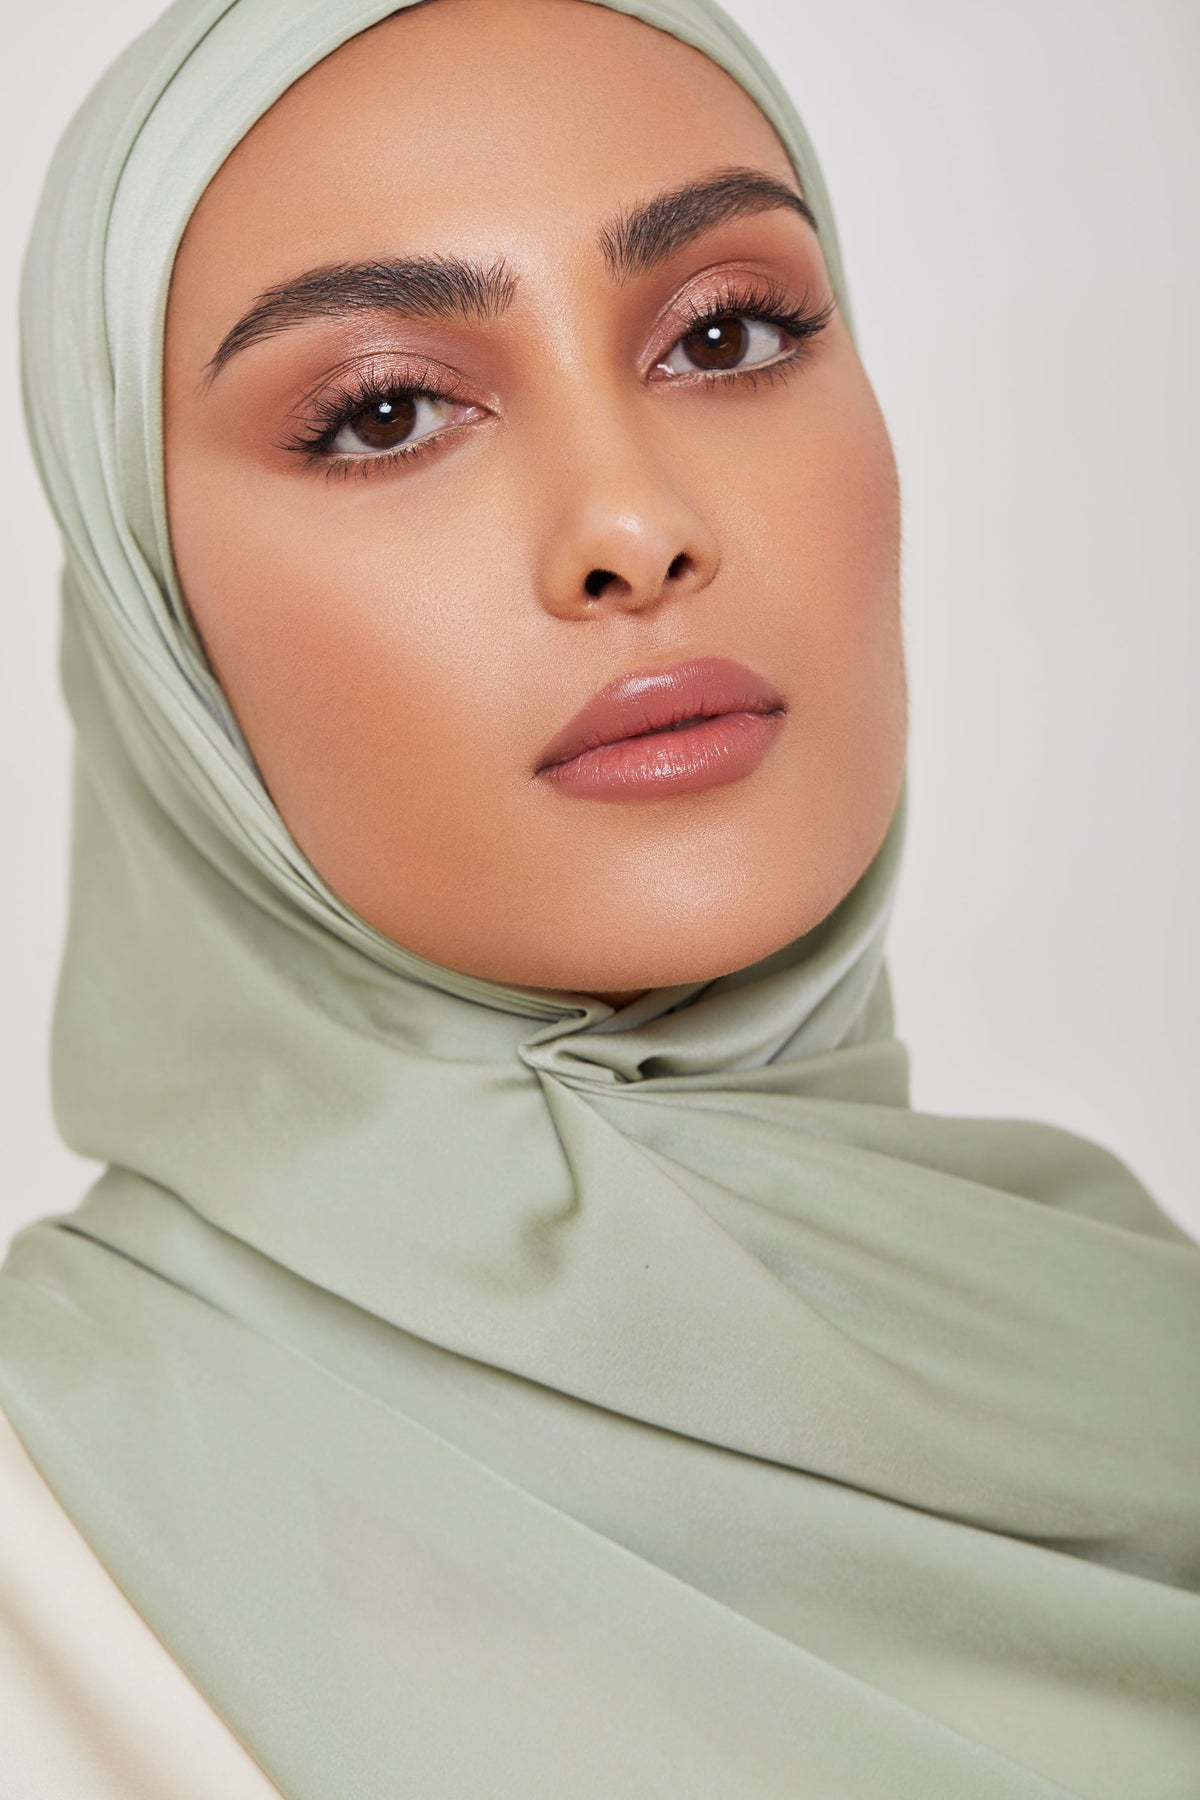 MATTE Satin Hijab - Soulmate Sage Veiled Collection 